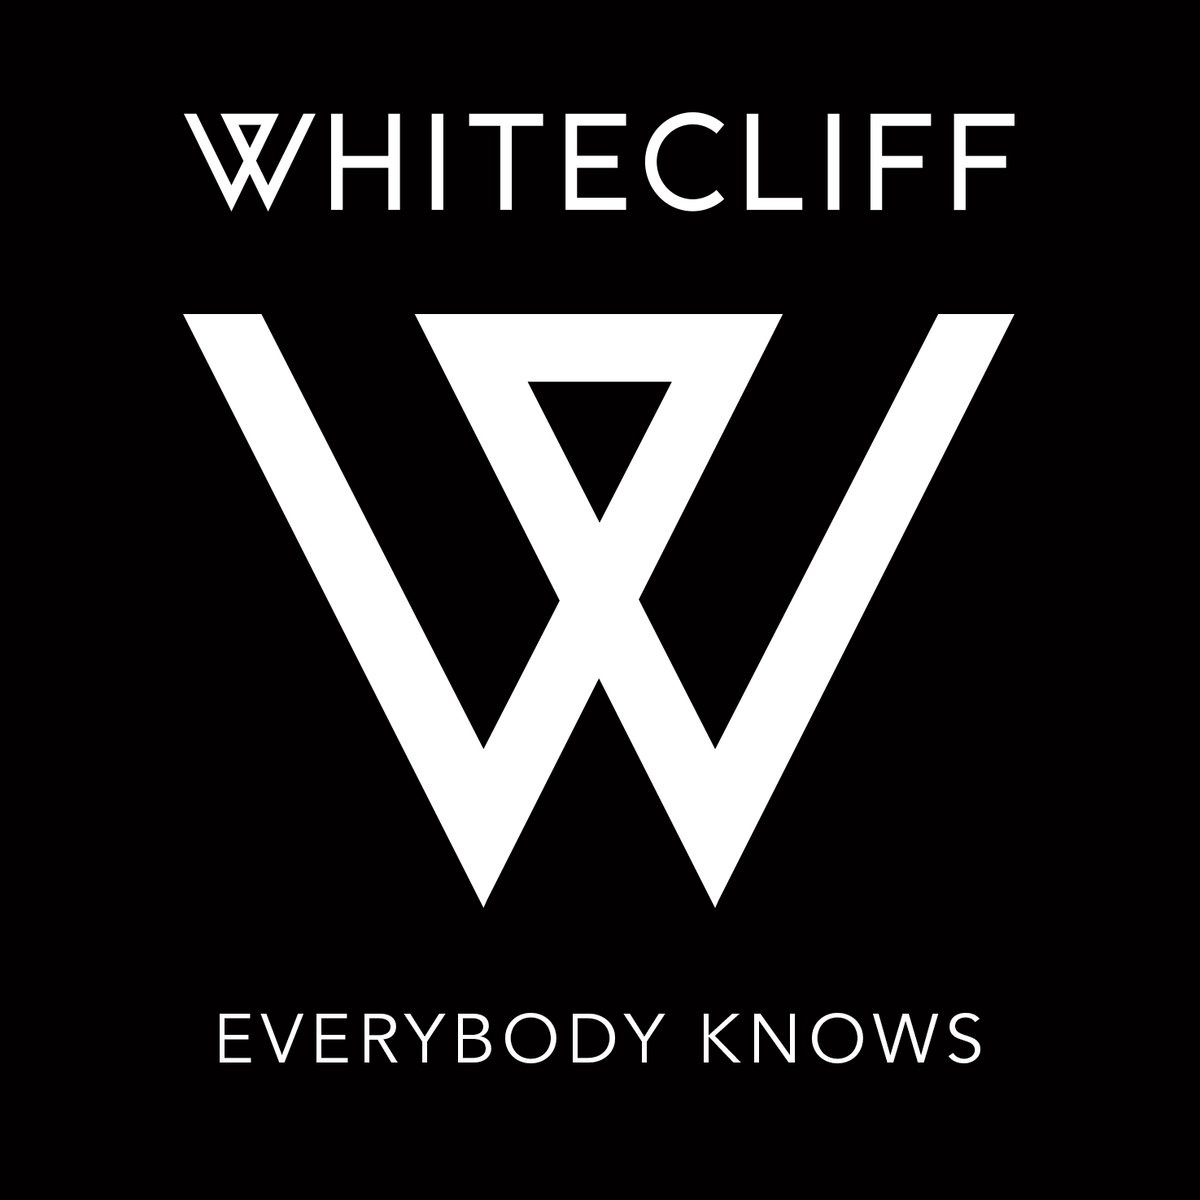 White Cliffs. Whitecliff лого. Everybody knows. Knows.